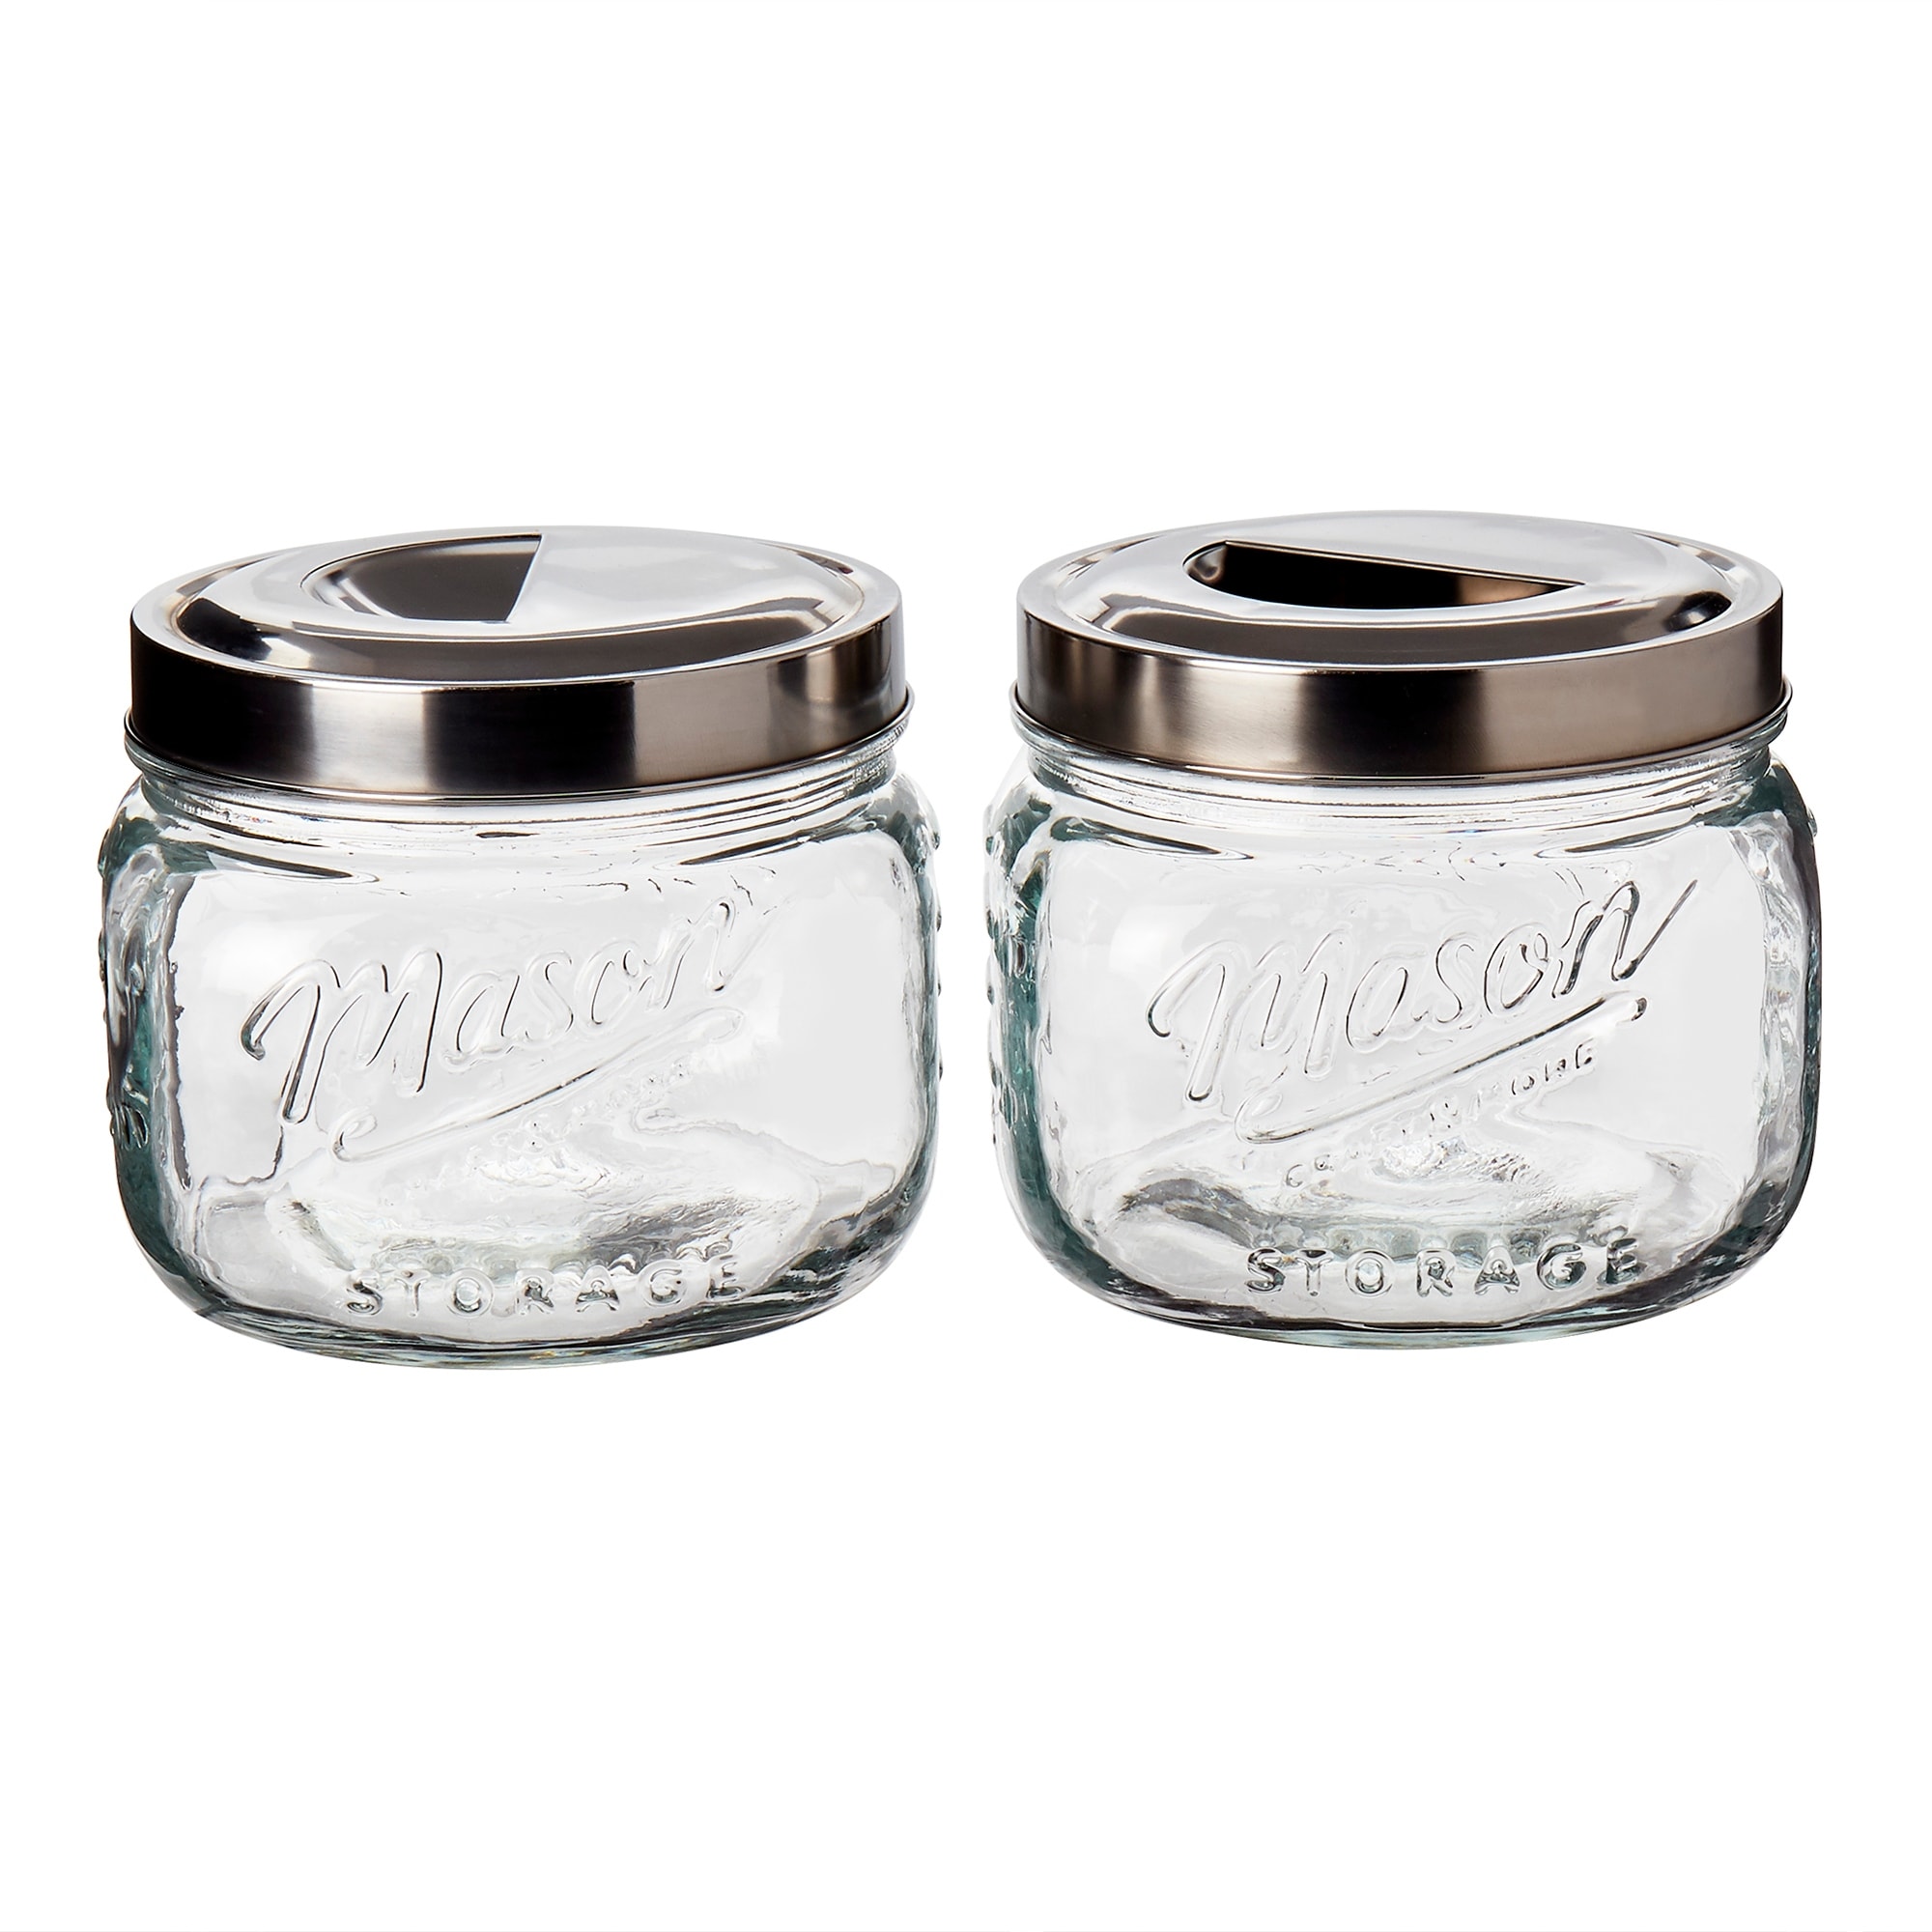 Mason Craft & More Mason Jar with Handle & Lid - Clear, 8 oz